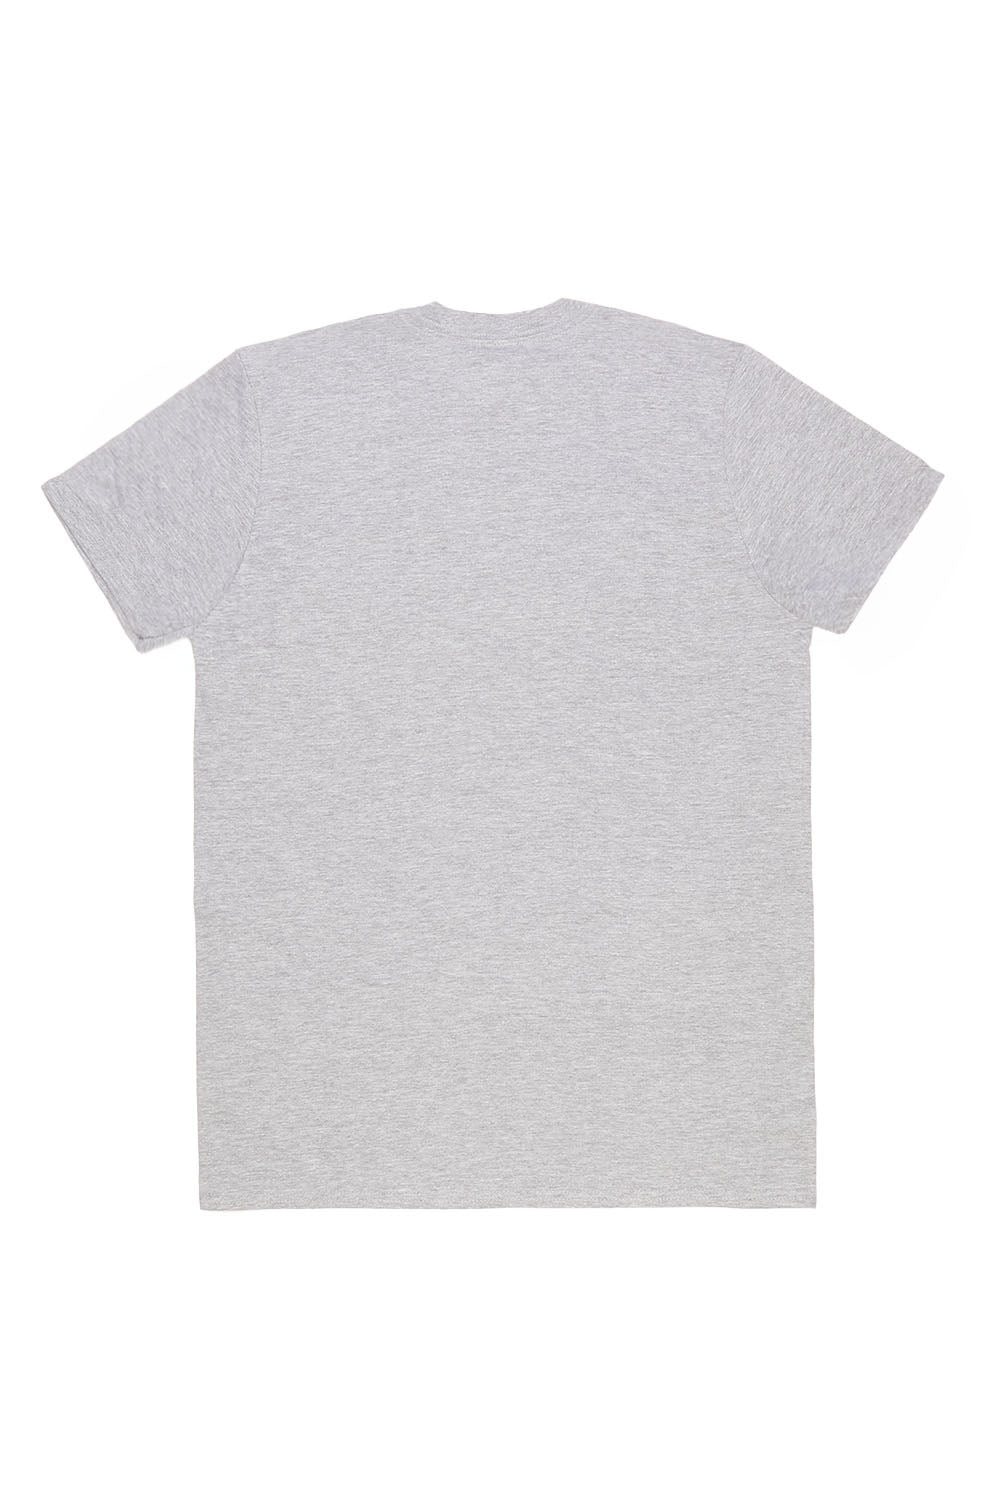 Heart of Bow's T-Shirt in Ash Grey (Custom Packs)